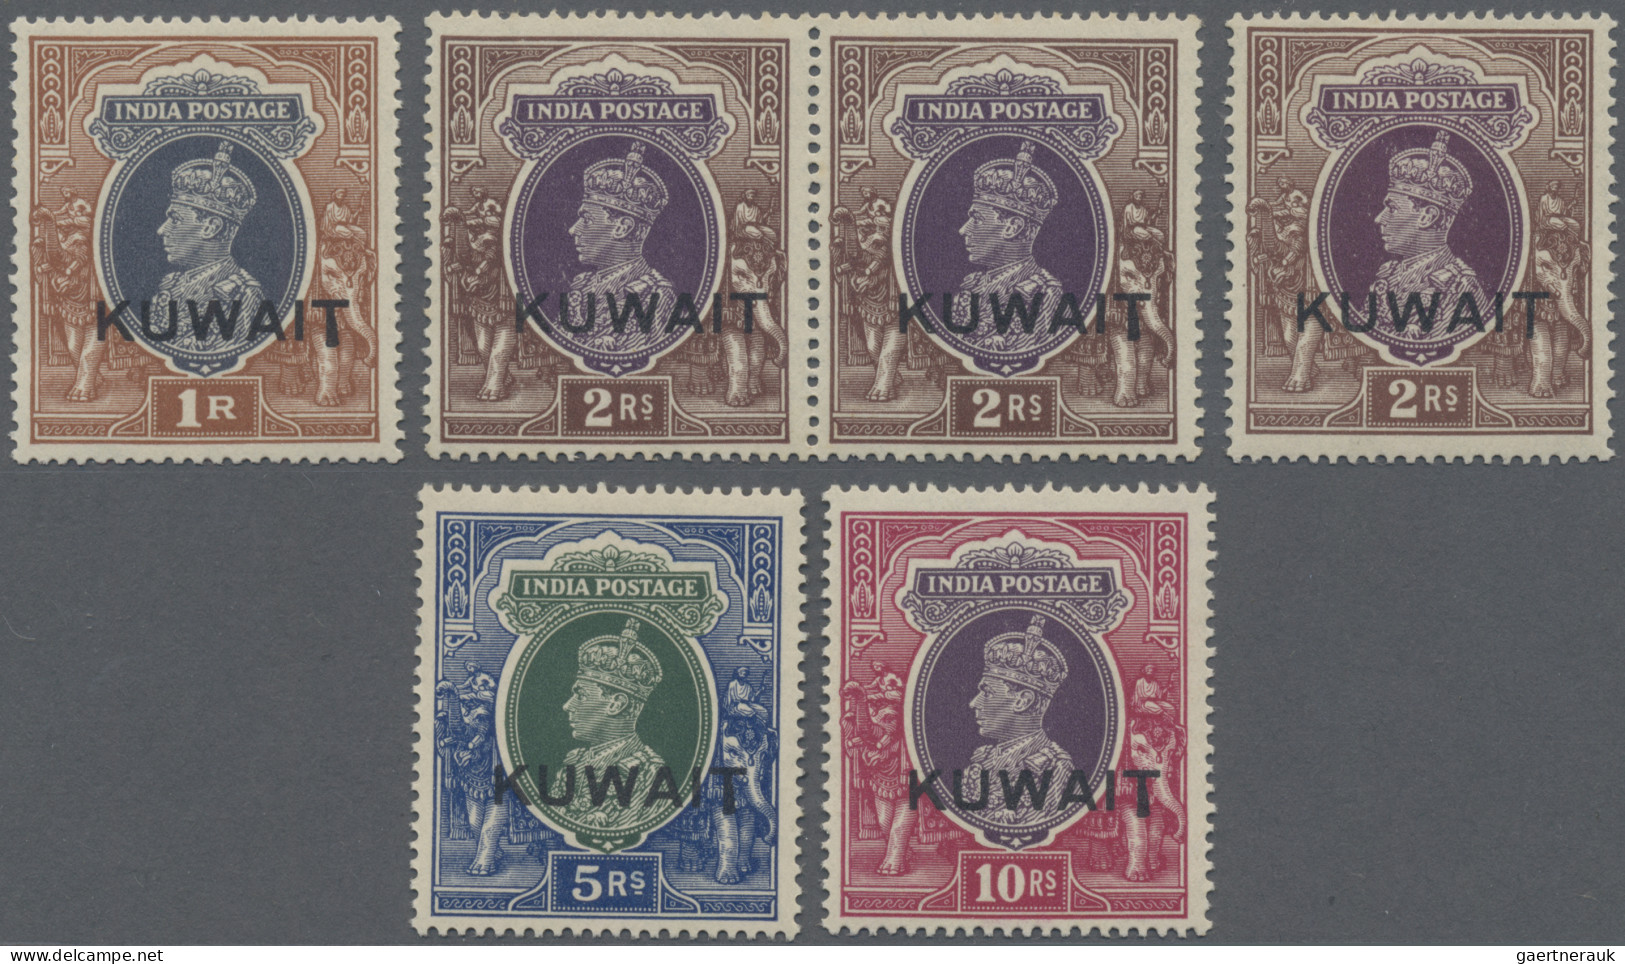 Kuwait: 1939 "KUWAIT" Overprint On KGVI. Rupee Values 1r., 2r., 5r. And 10r. Sho - Kuwait